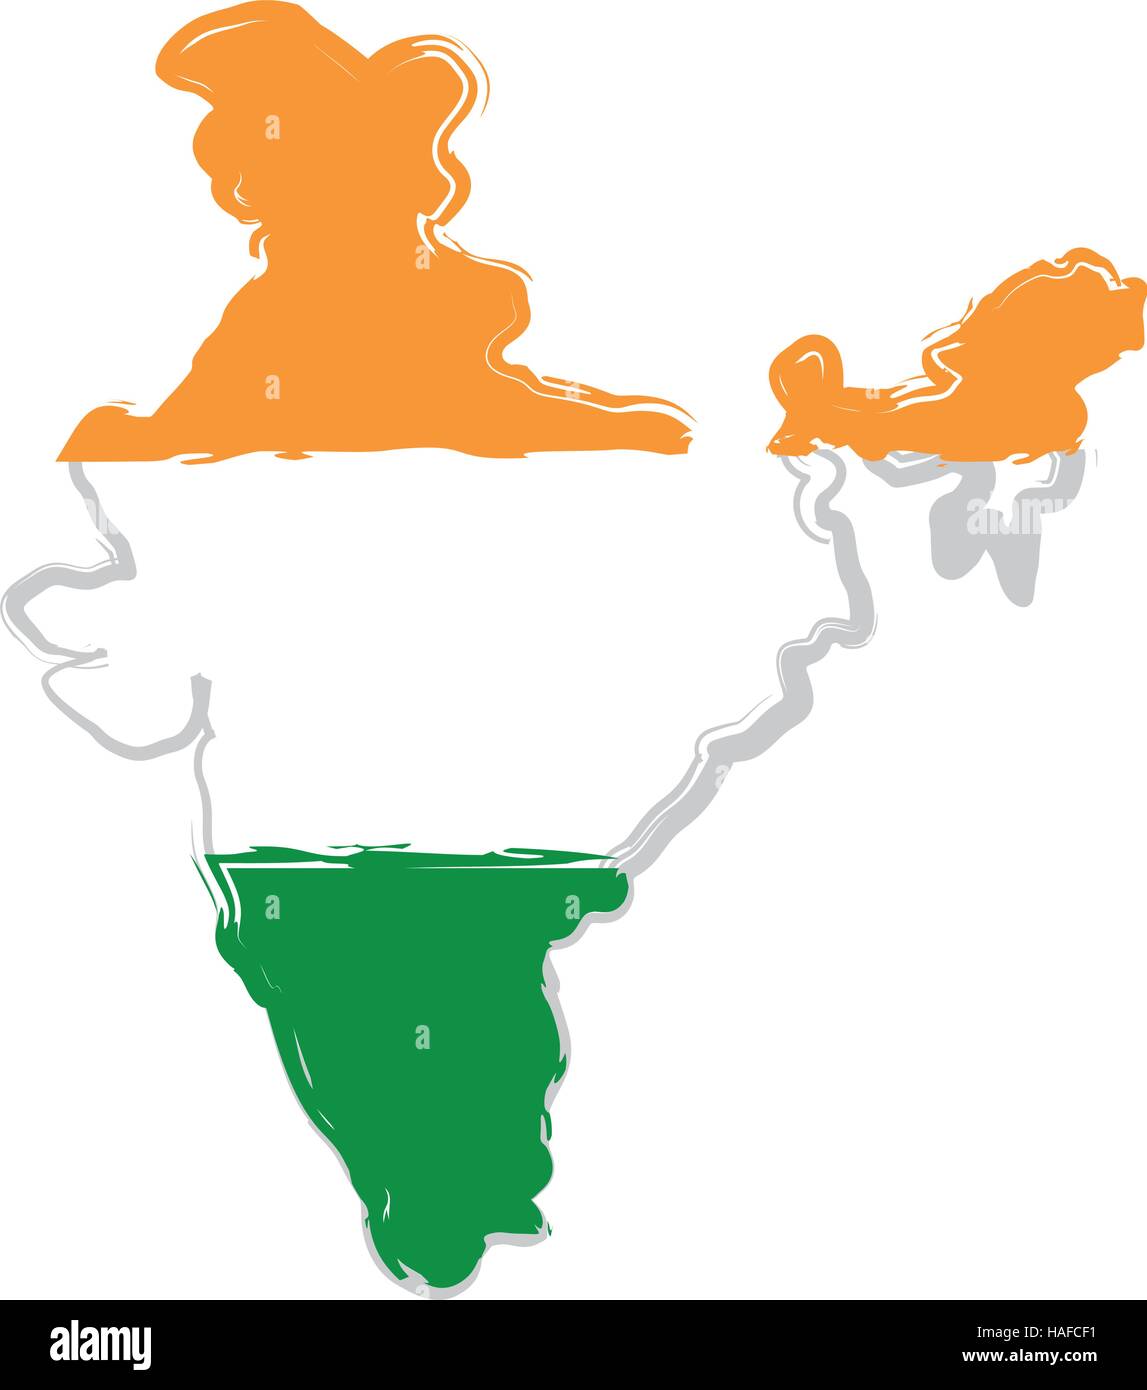 Indien Karte silhouette Stock Vektor